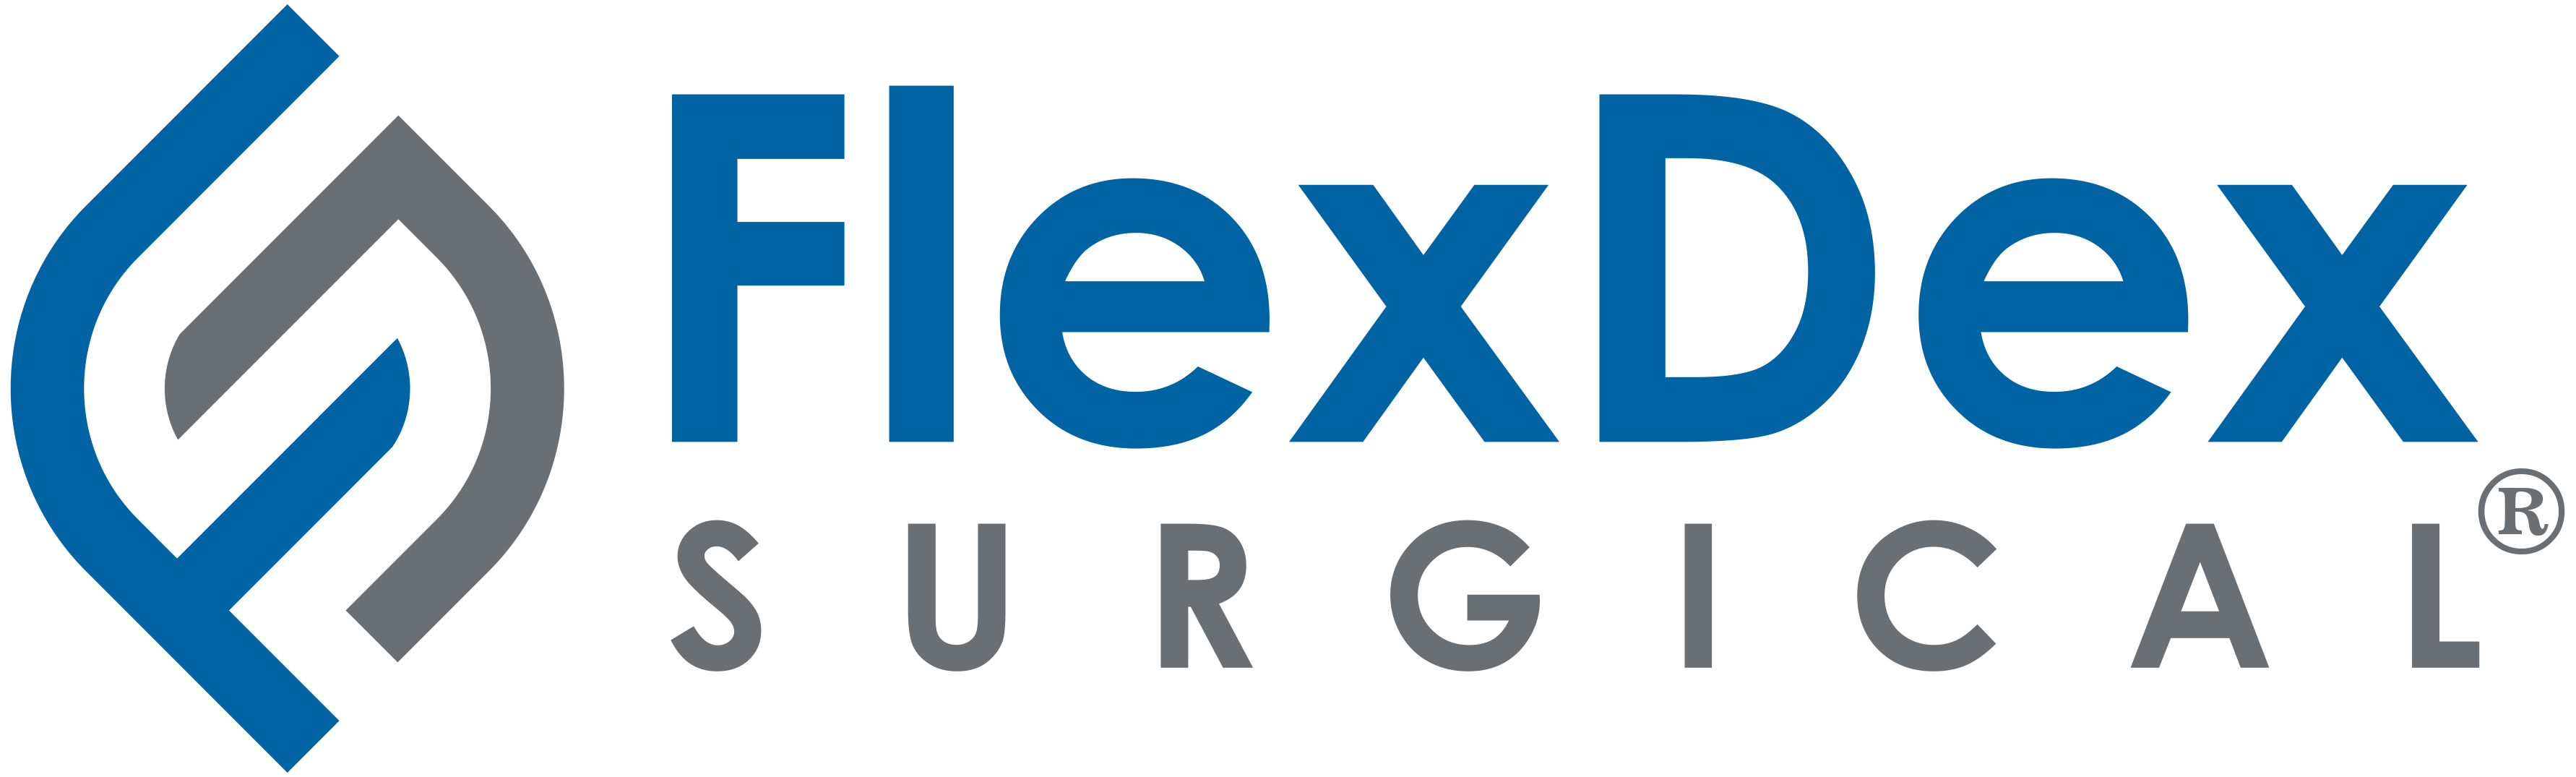 FlexDex, Inc. Appoin